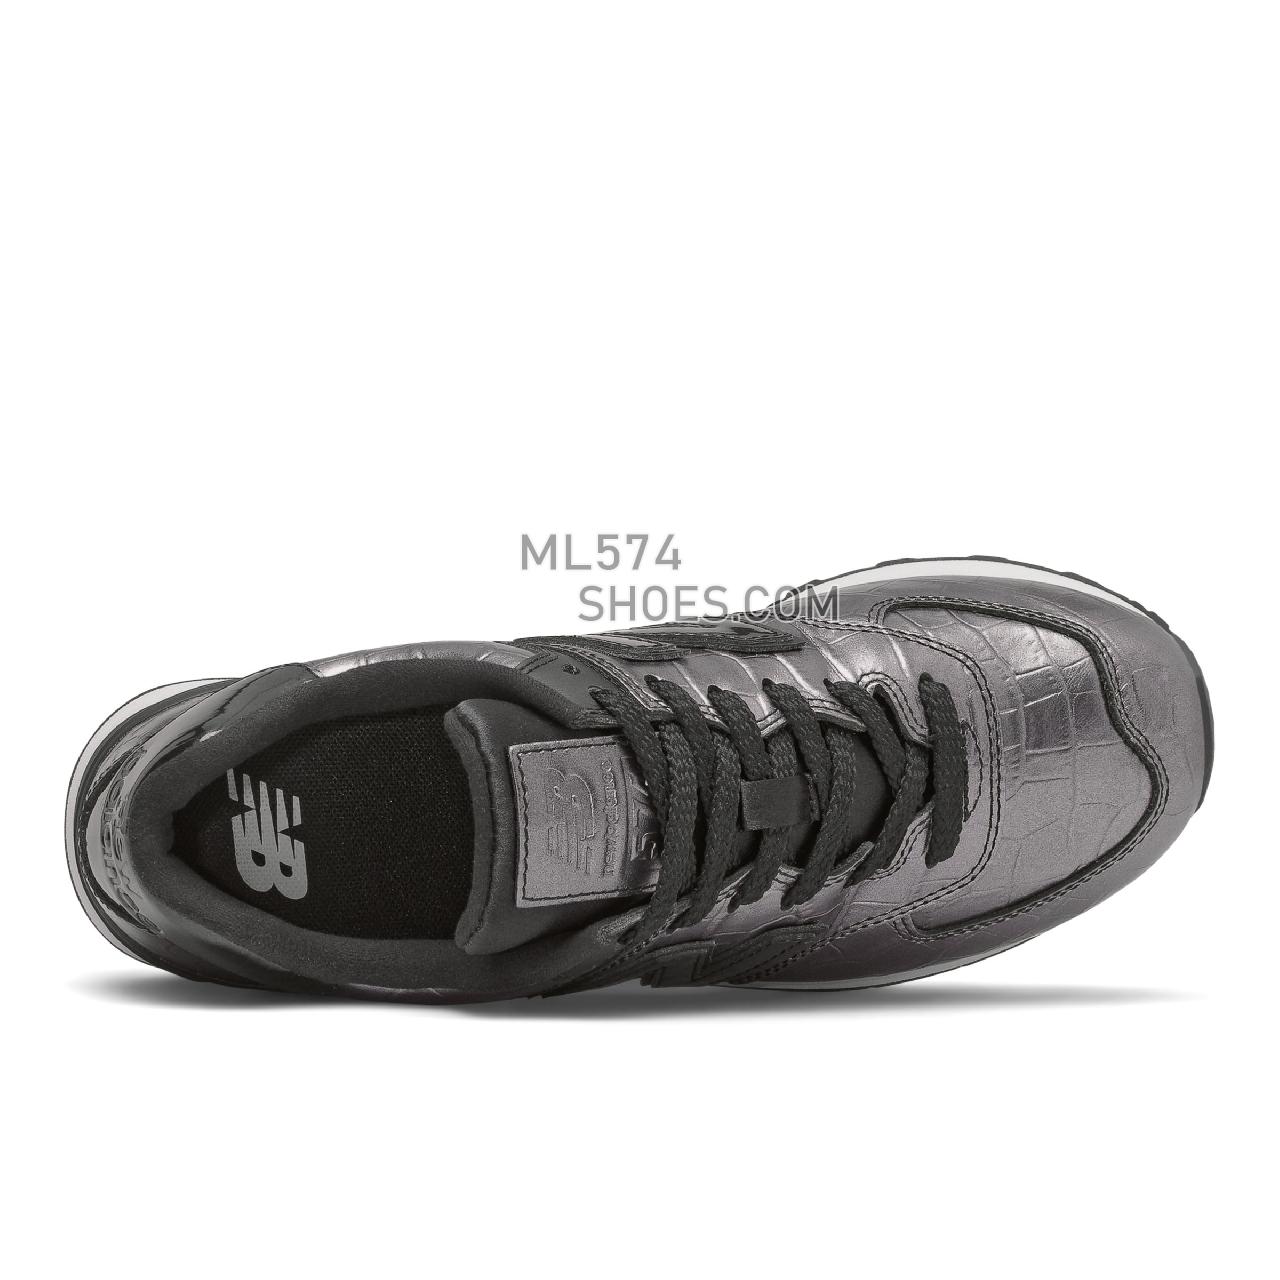 New Balance 574 - Women's Classic Sneakers - Black - WL574PW2